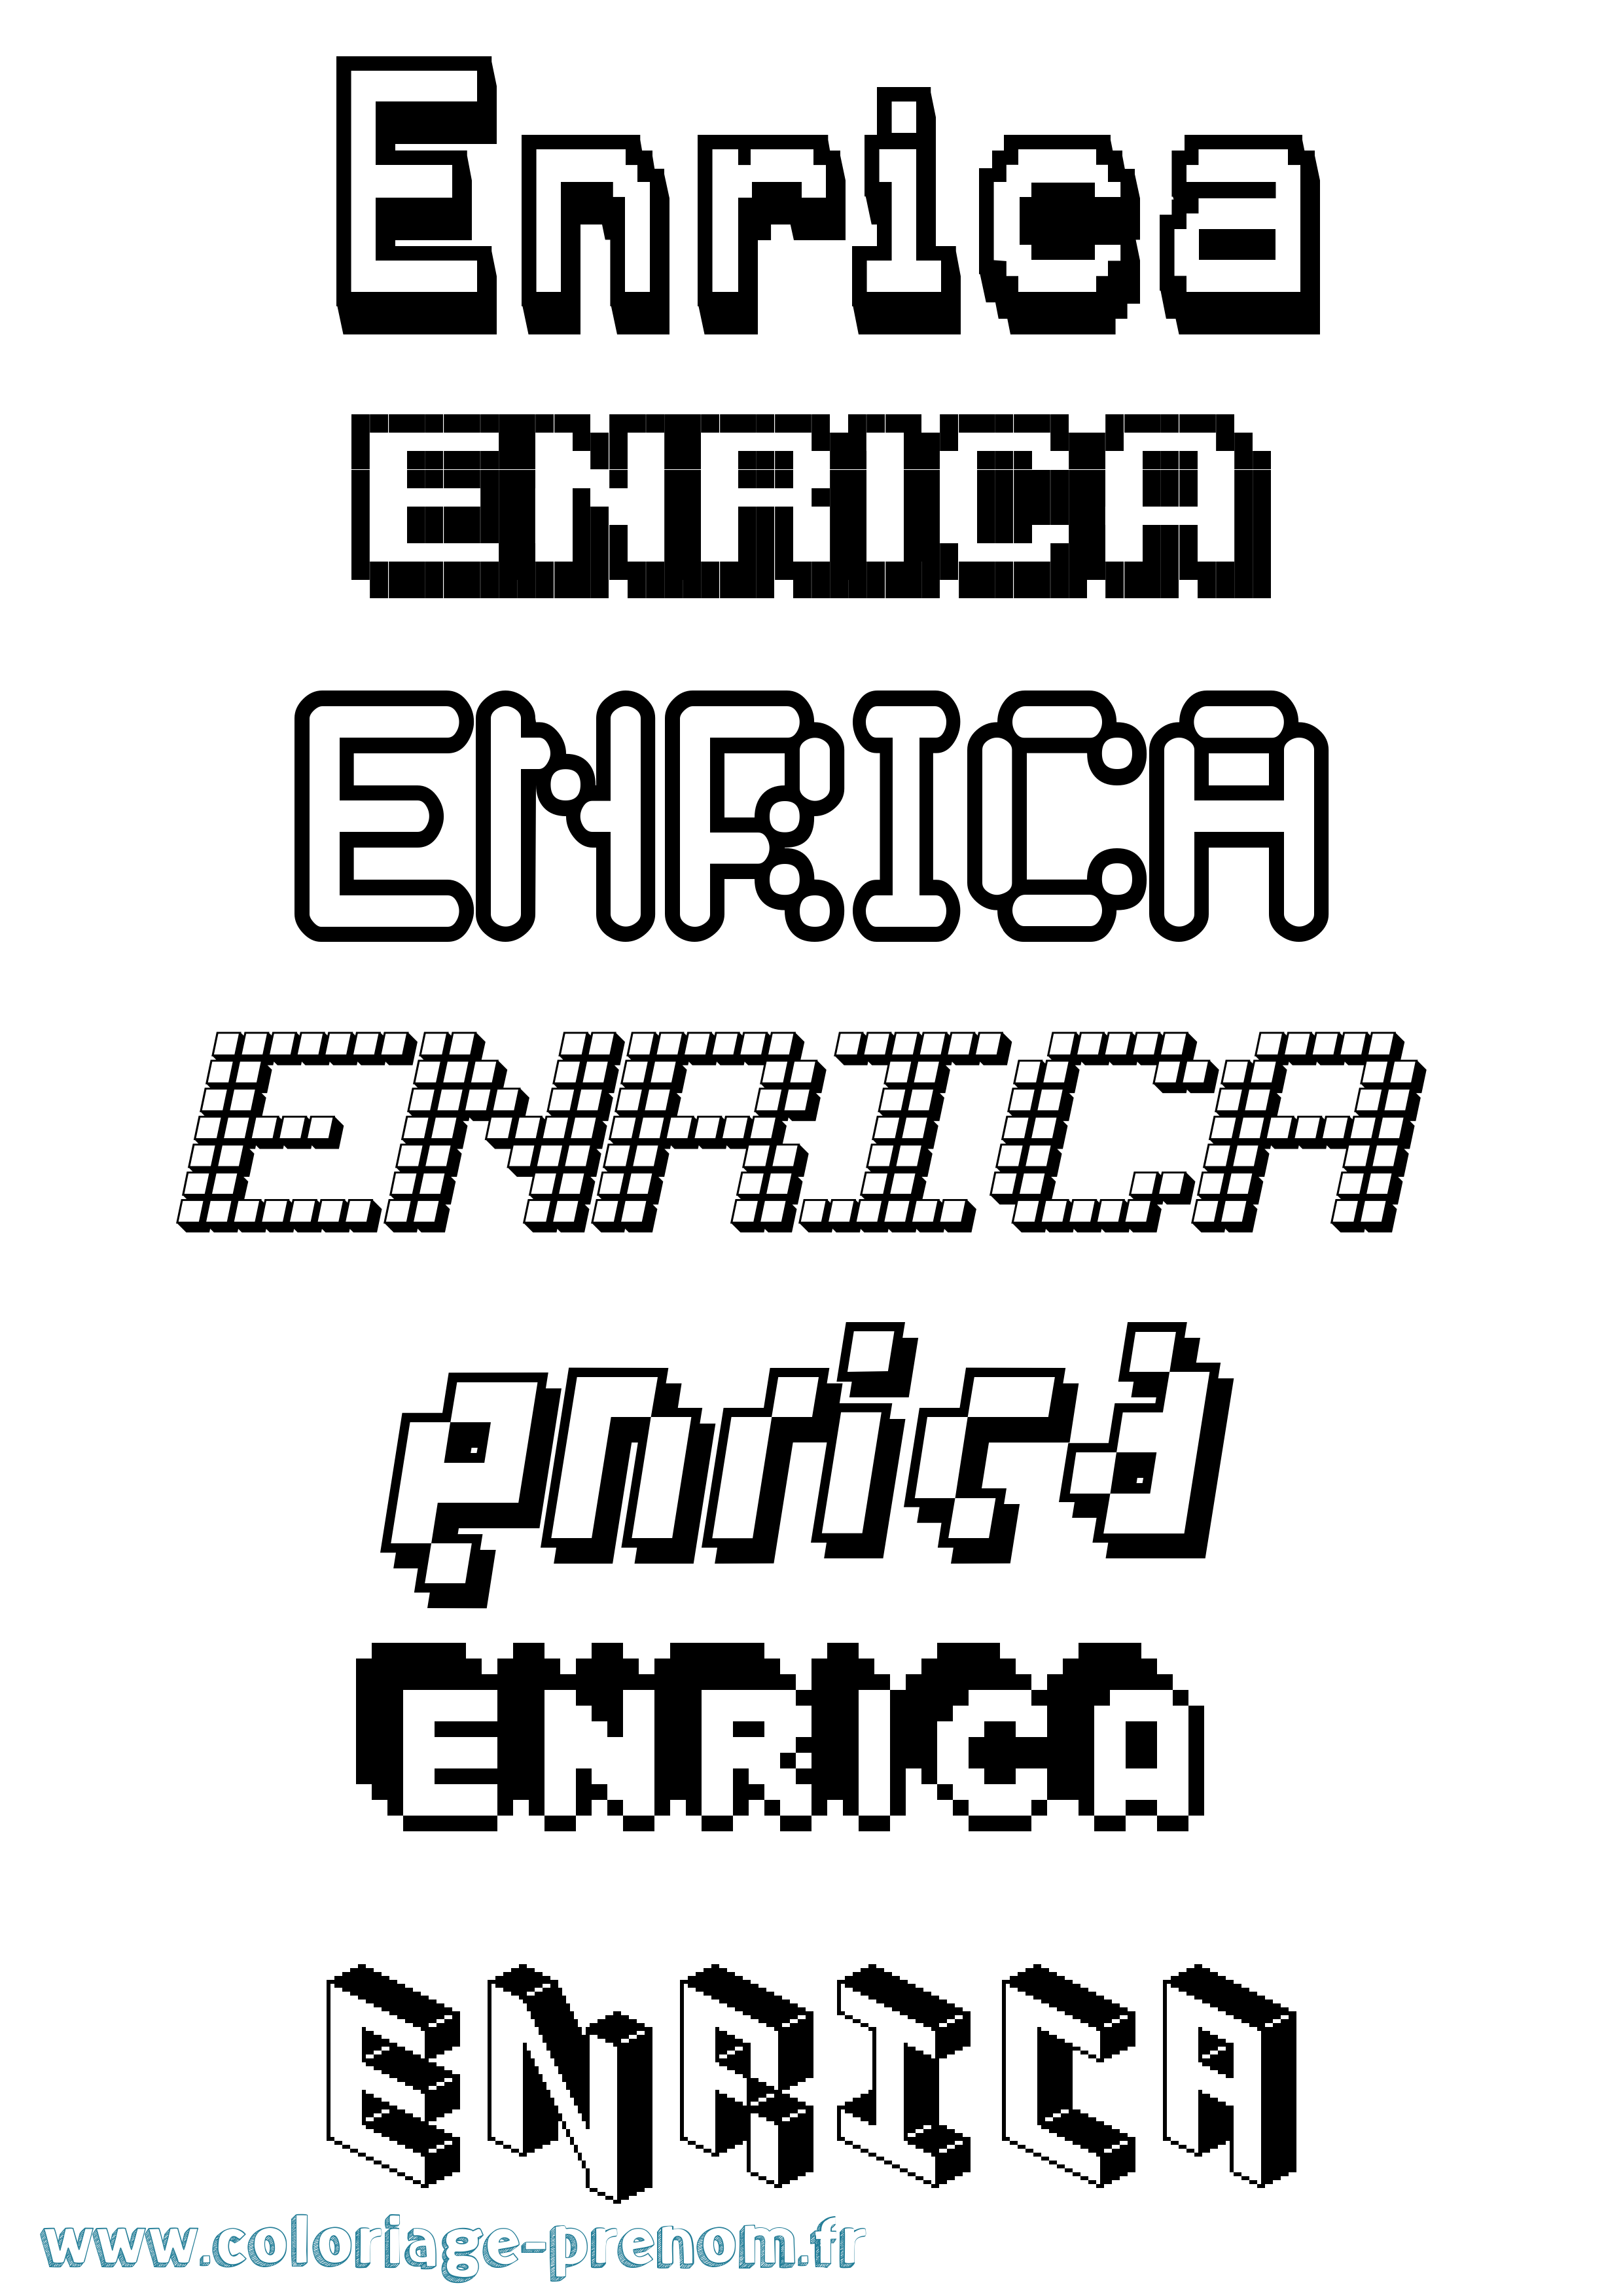 Coloriage prénom Enrica Pixel